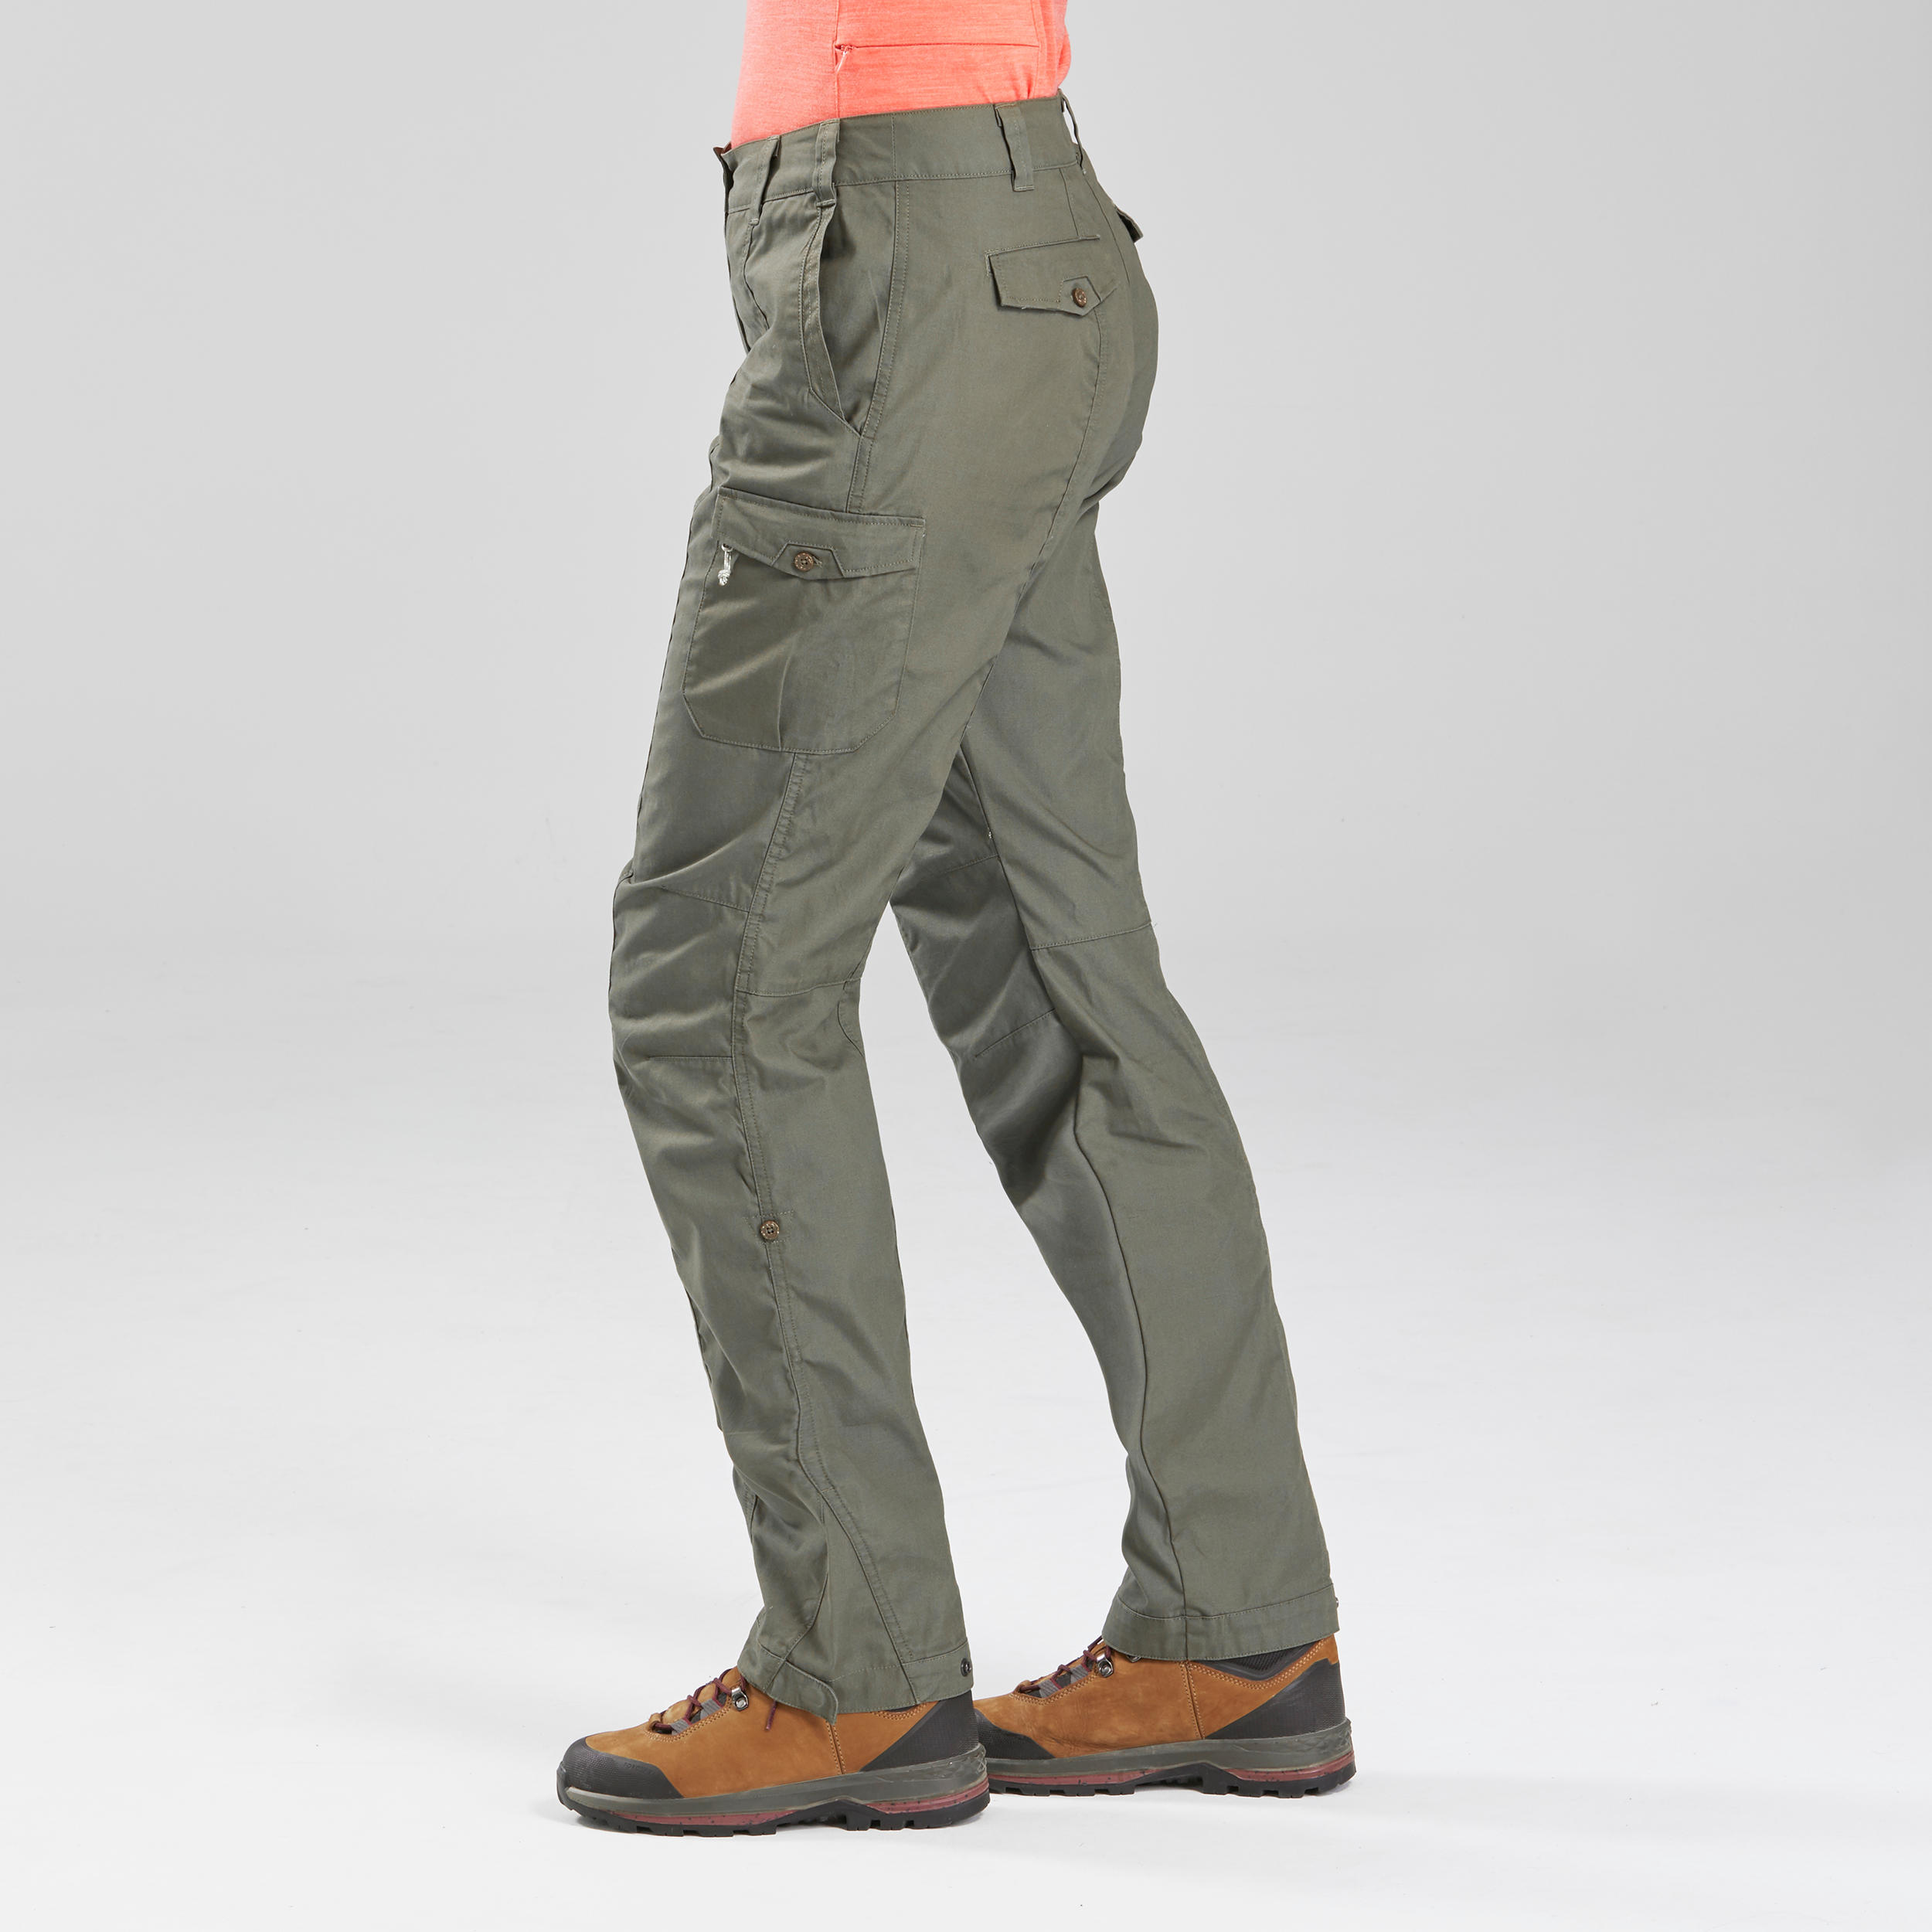 Tall Khaki Pants For Women  ShopStyle